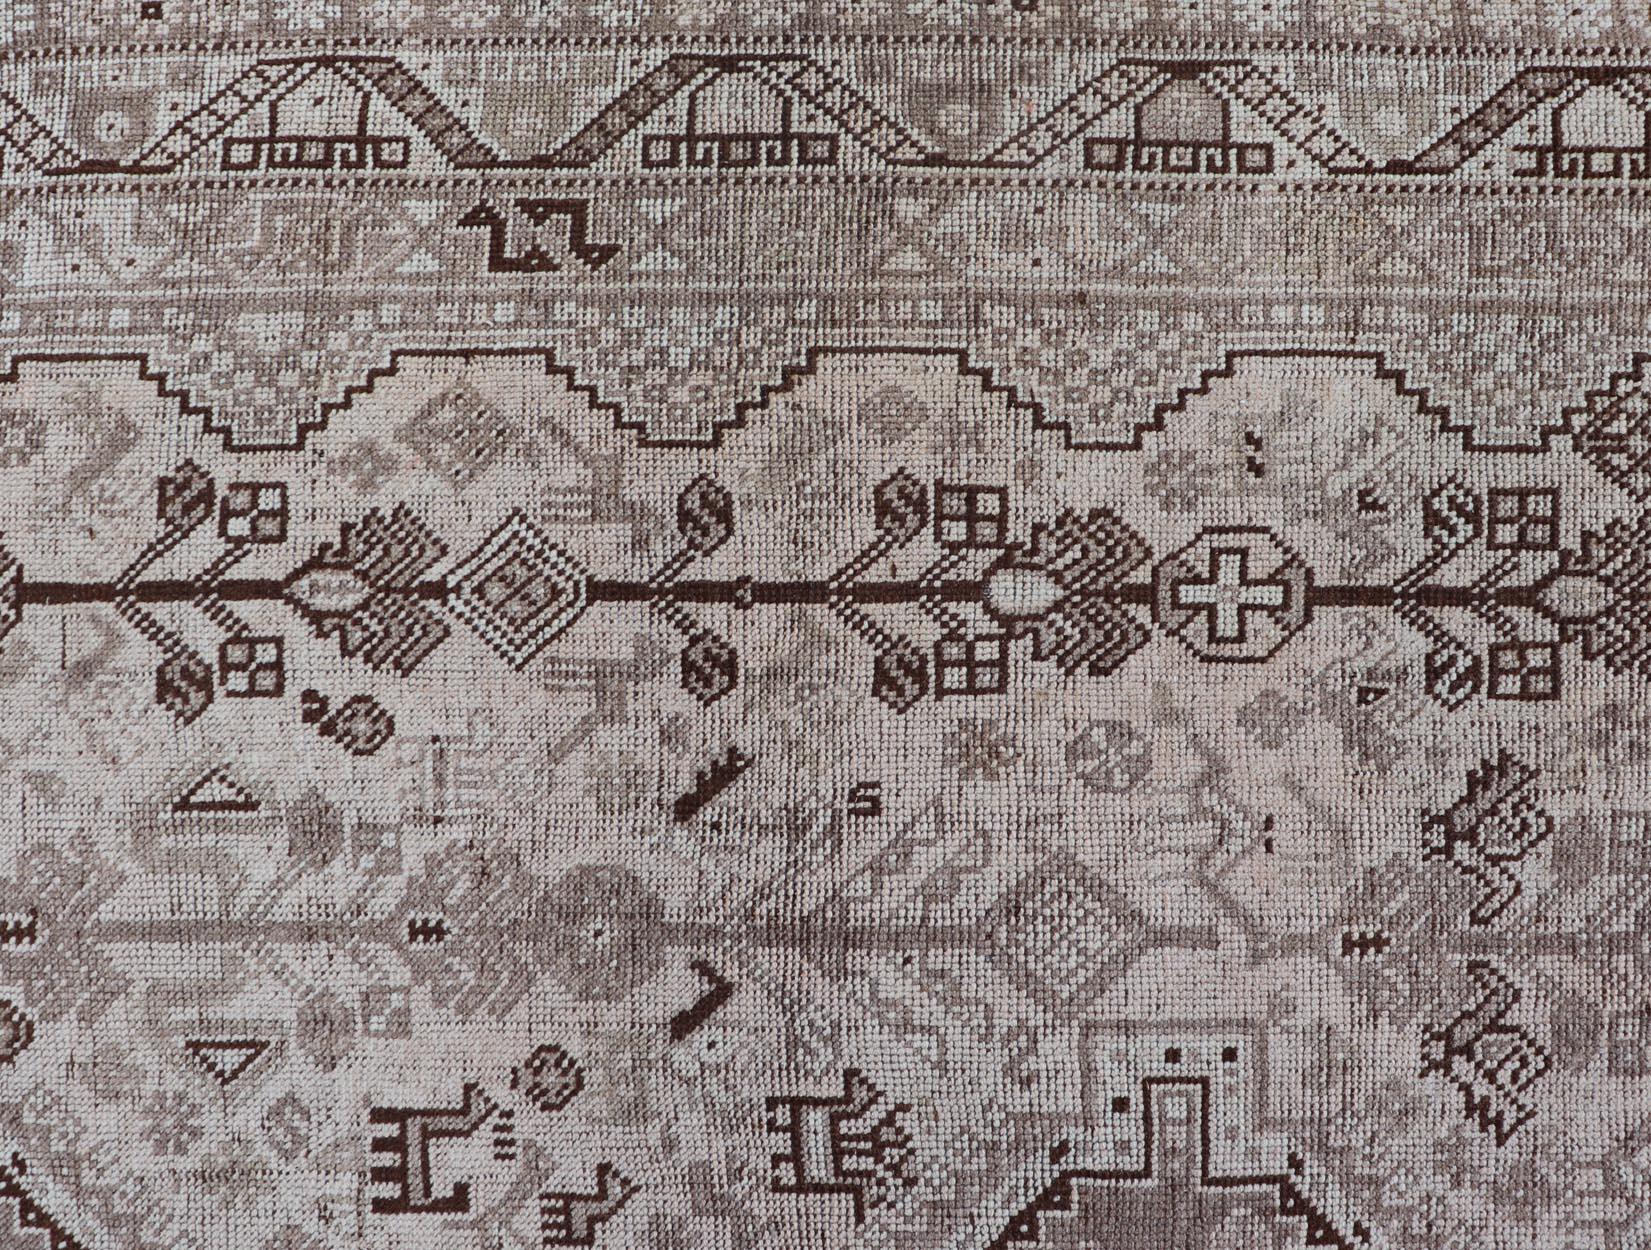 Persian Shiraz rug with vertical sub-geometric medallions in earth tones. 
rug TU-MTU-4970, country of origin / type: Iran / Shiraz, circa 1920
Keivan Woven Arts 

Measures: 7'0 x 10'0.